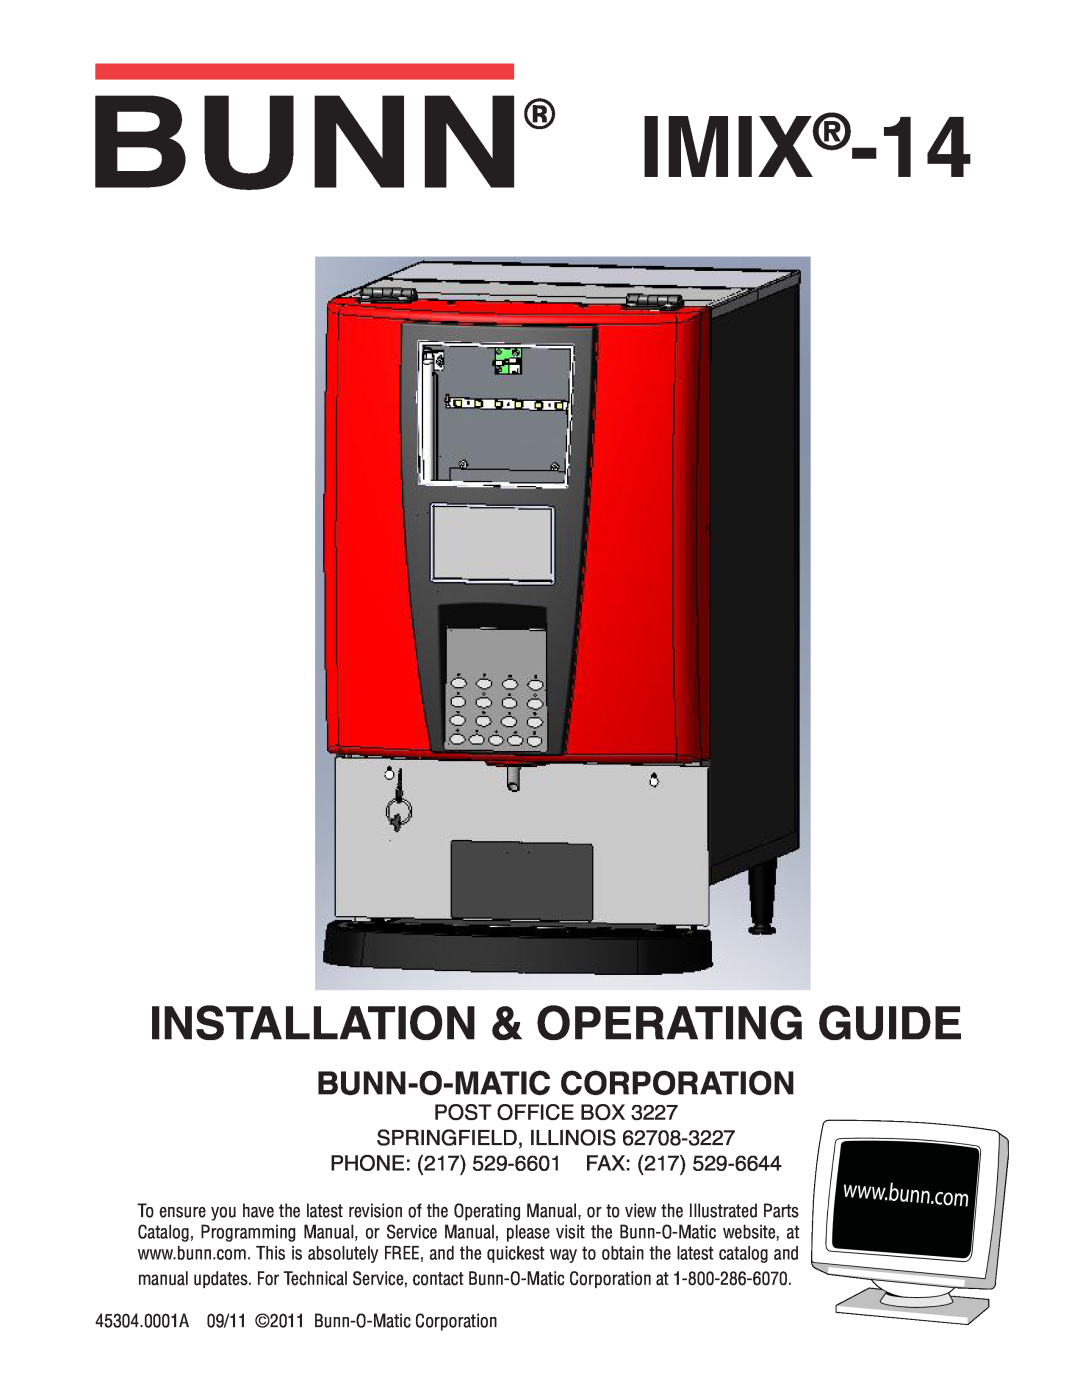 Bunn manual IMIX-14, Installation & Operating Guide, Bunn-O-Matic Corporation 